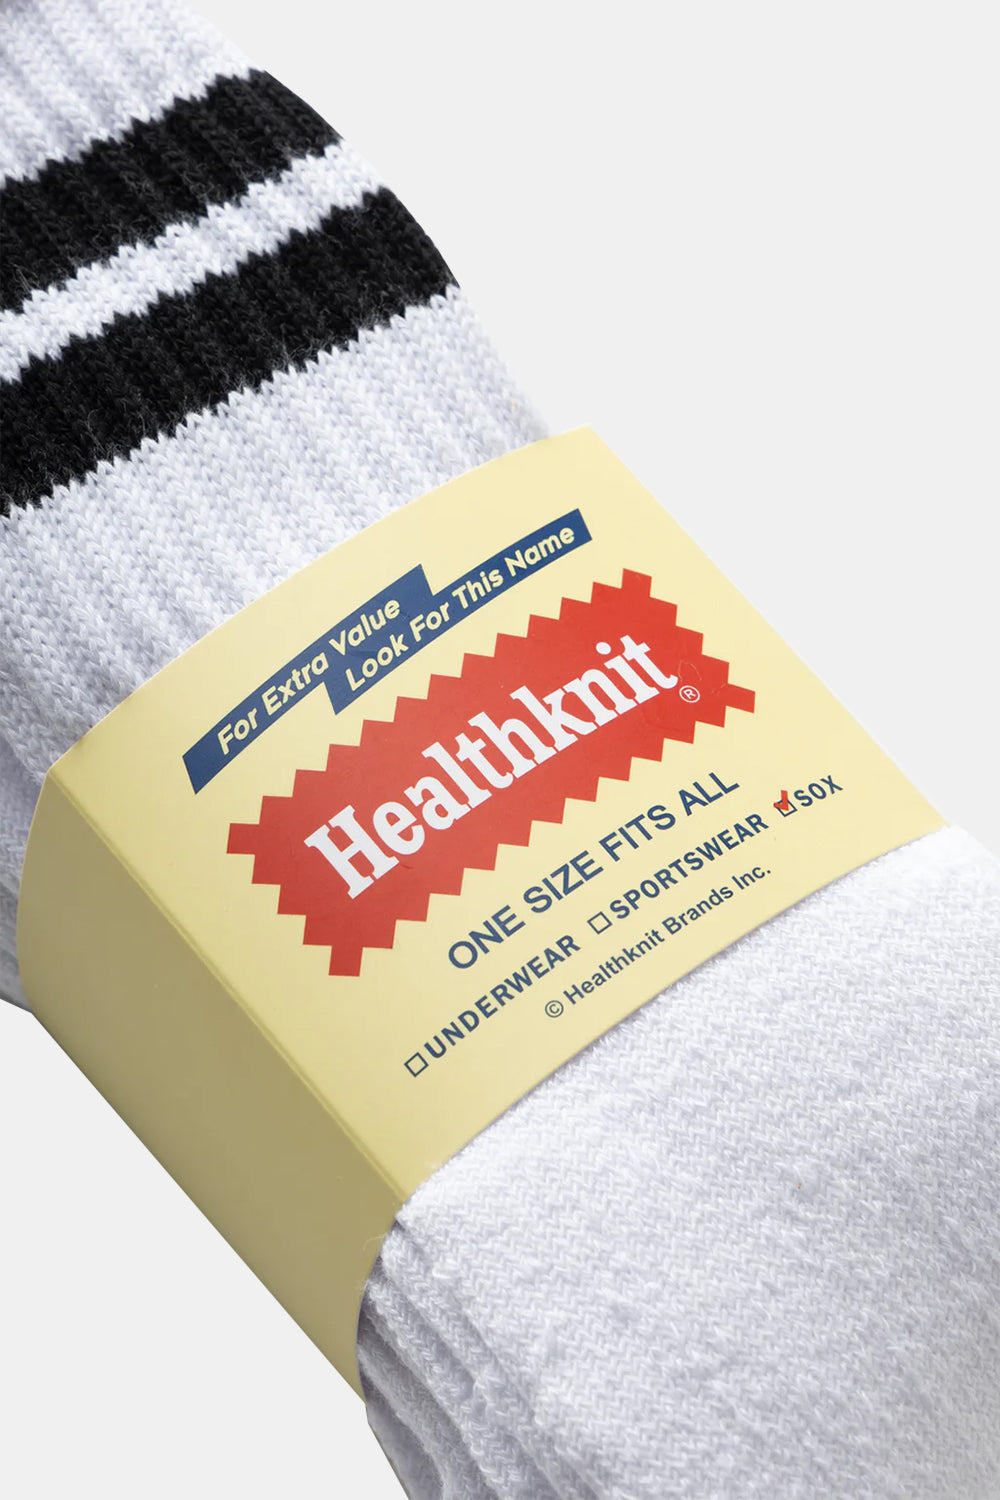 Healthknit 3 Pack 3 Line Crew Socks (Navy/Black/Grey)